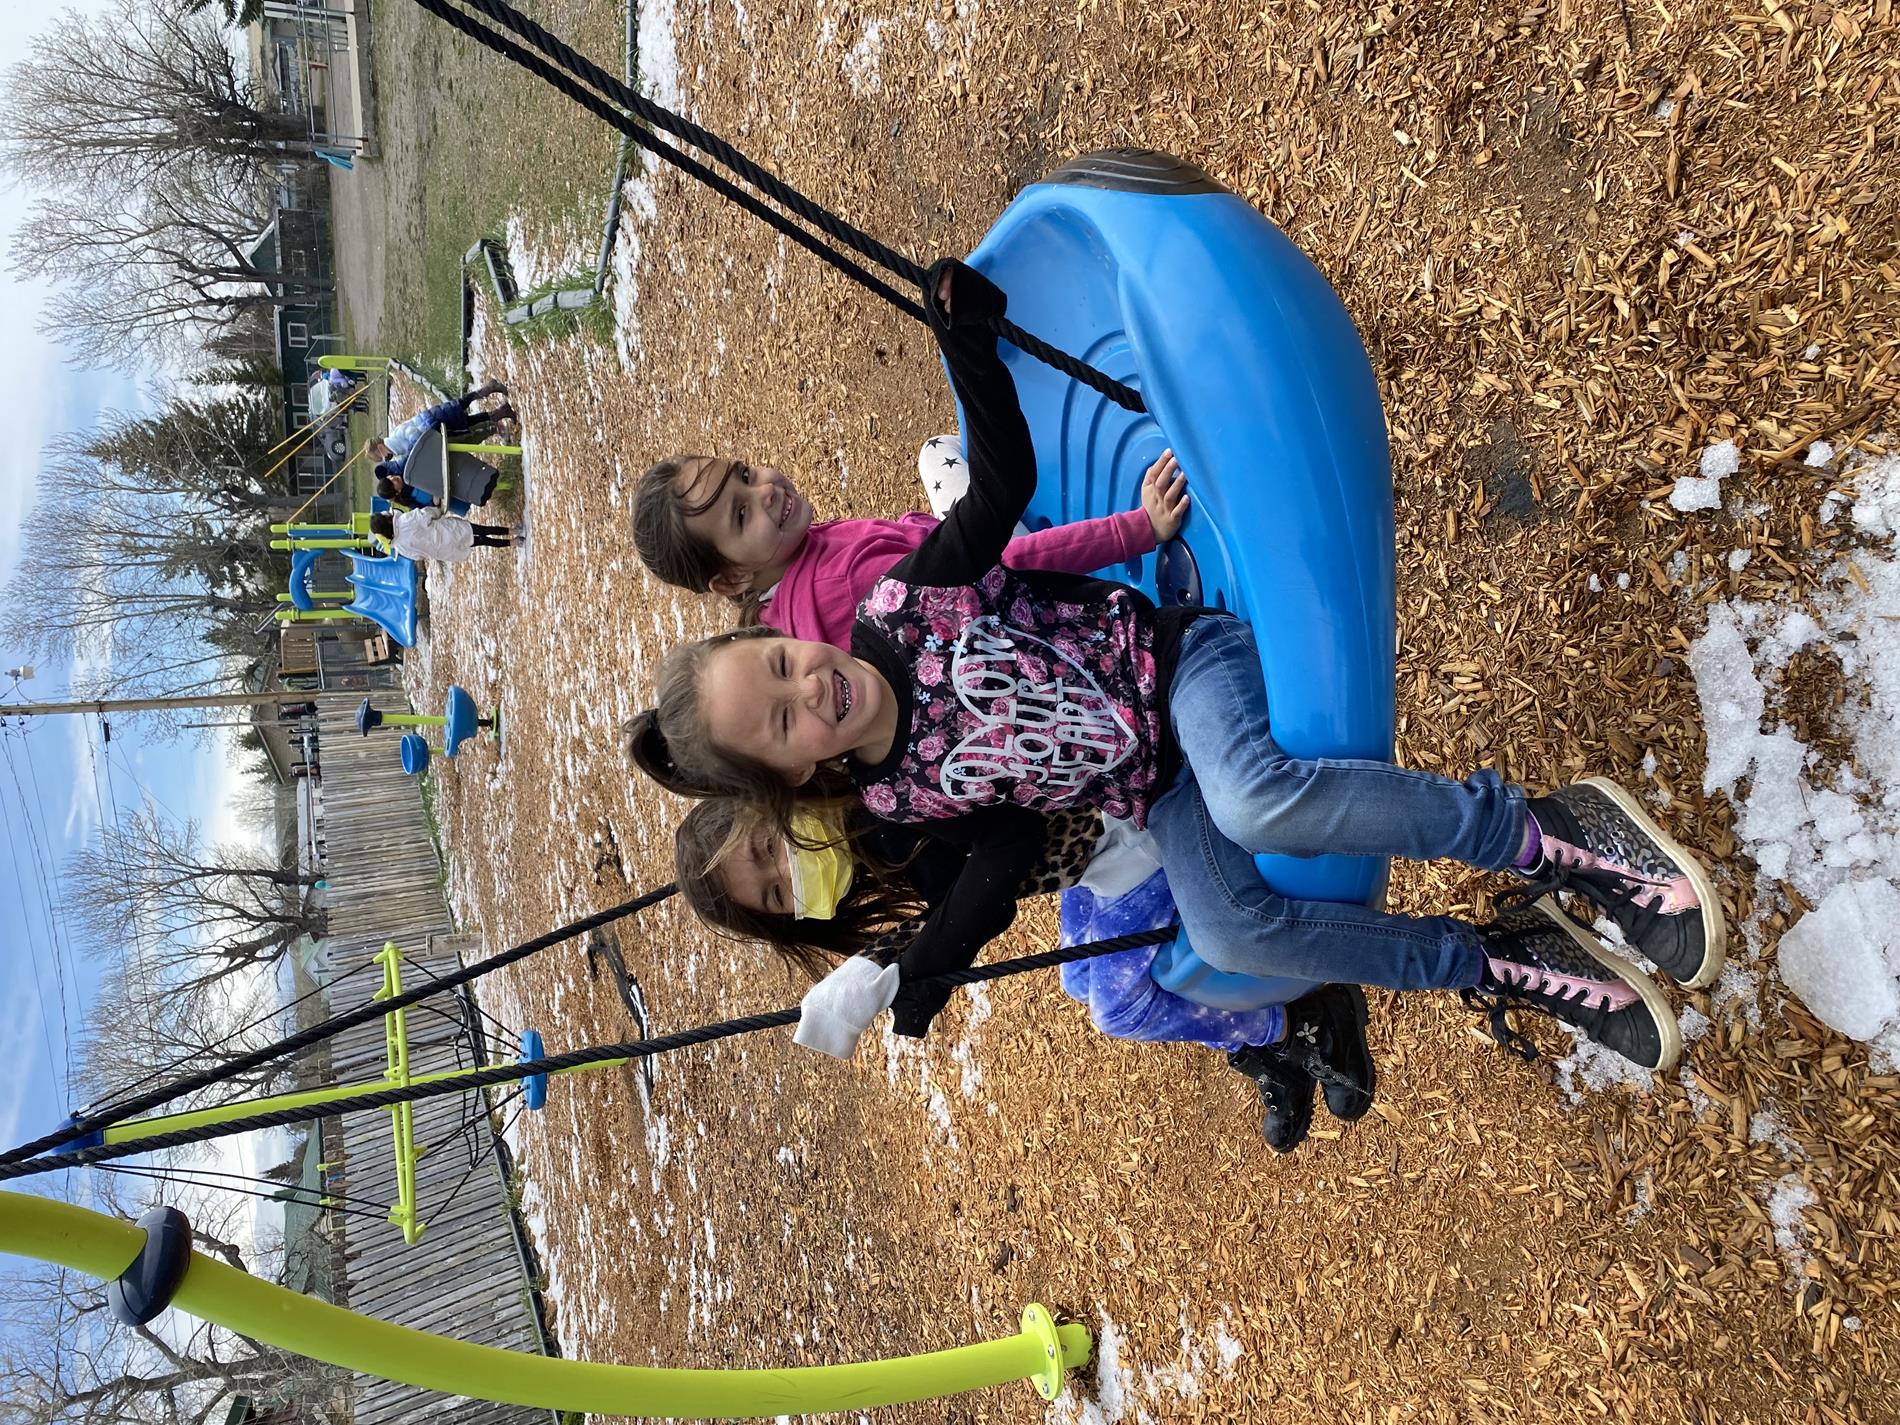 Students on Playground